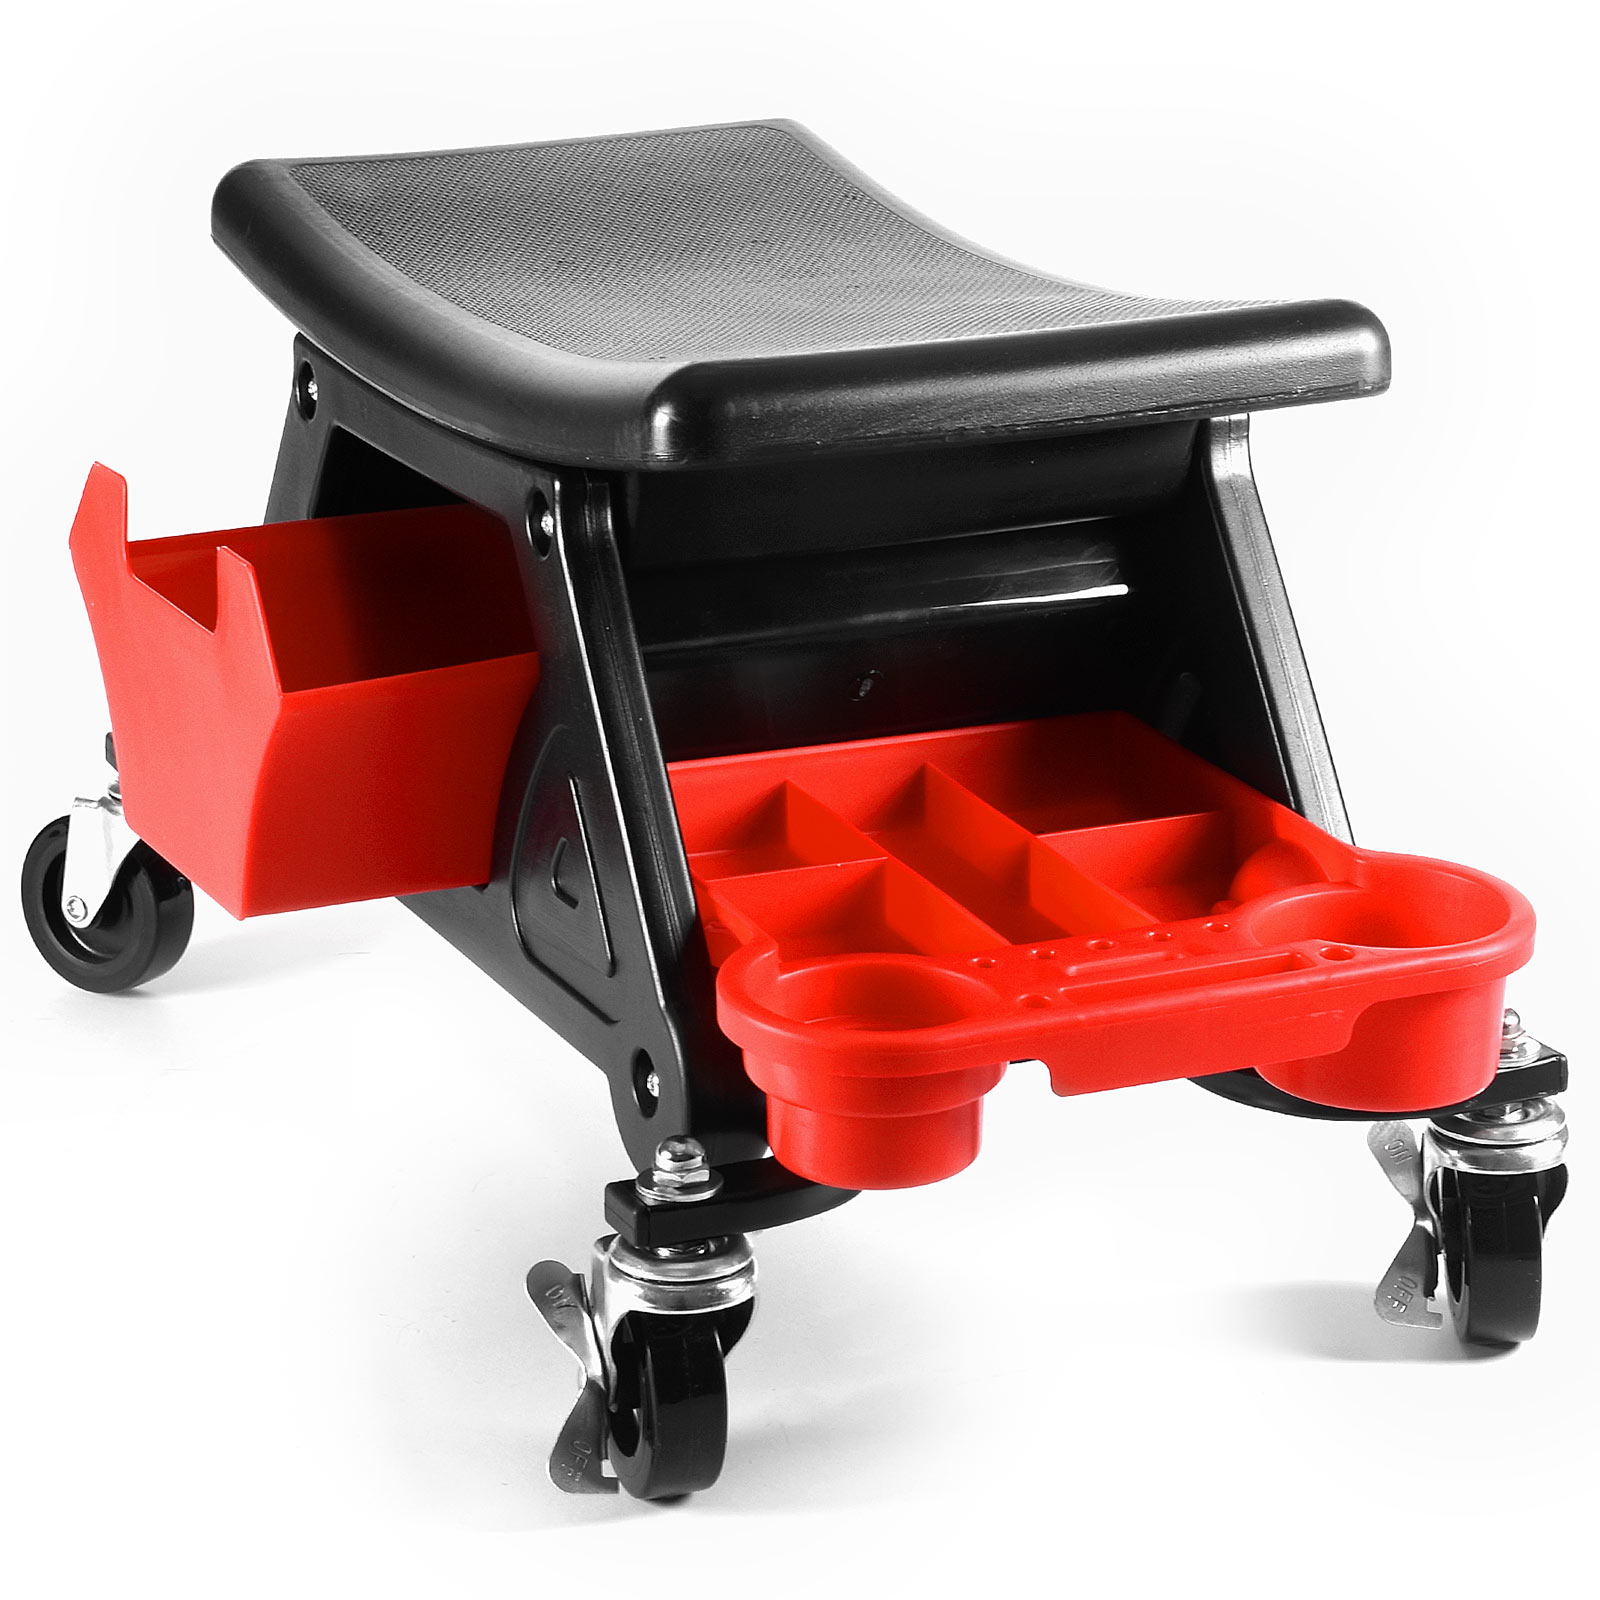 Biltek Heavy-Duty Rolling Garage Shop Mechanic Creeper Stool Chair, Includes Tools Storage Trays, Durable 300lbs Capacity, Black